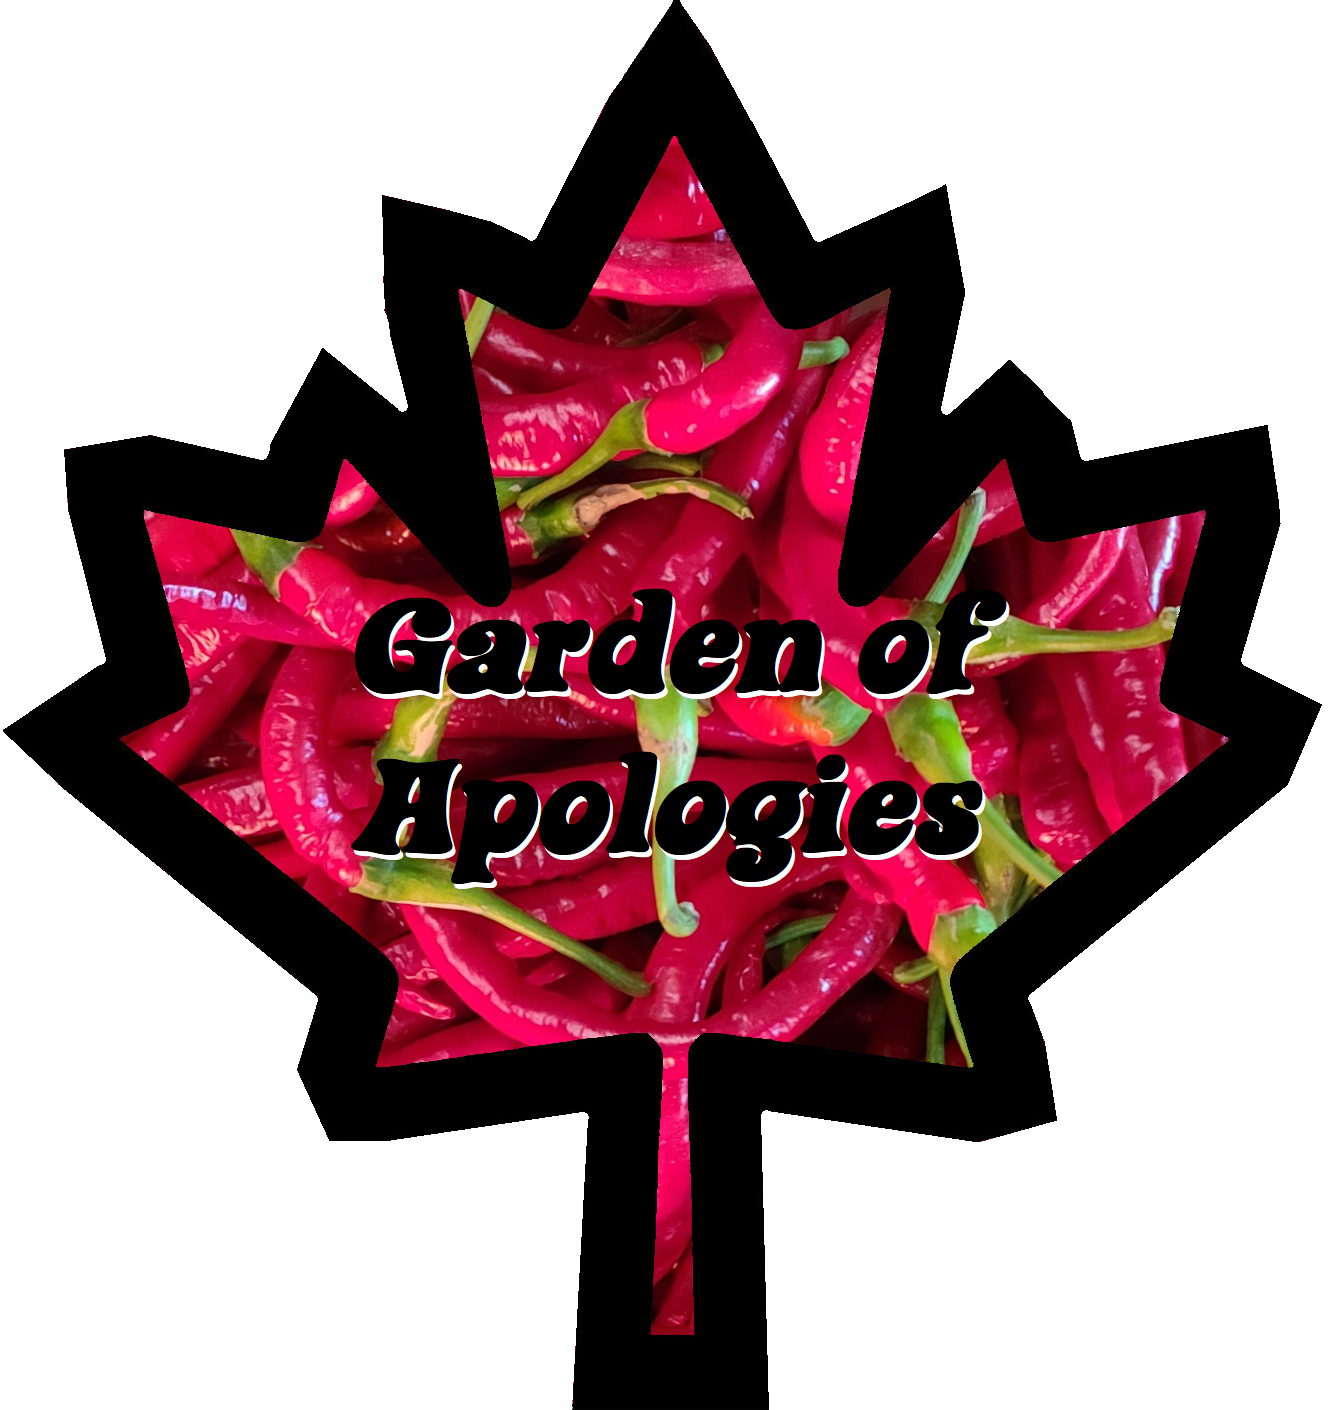 Garden of Apologies Canadian Pepper Farm